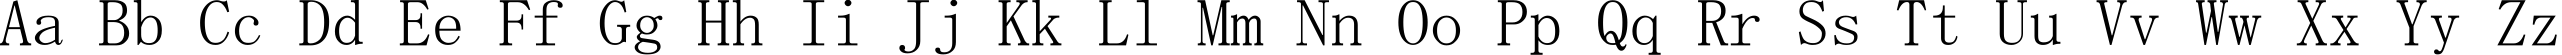 Пример написания английского алфавита шрифтом MS Mincho